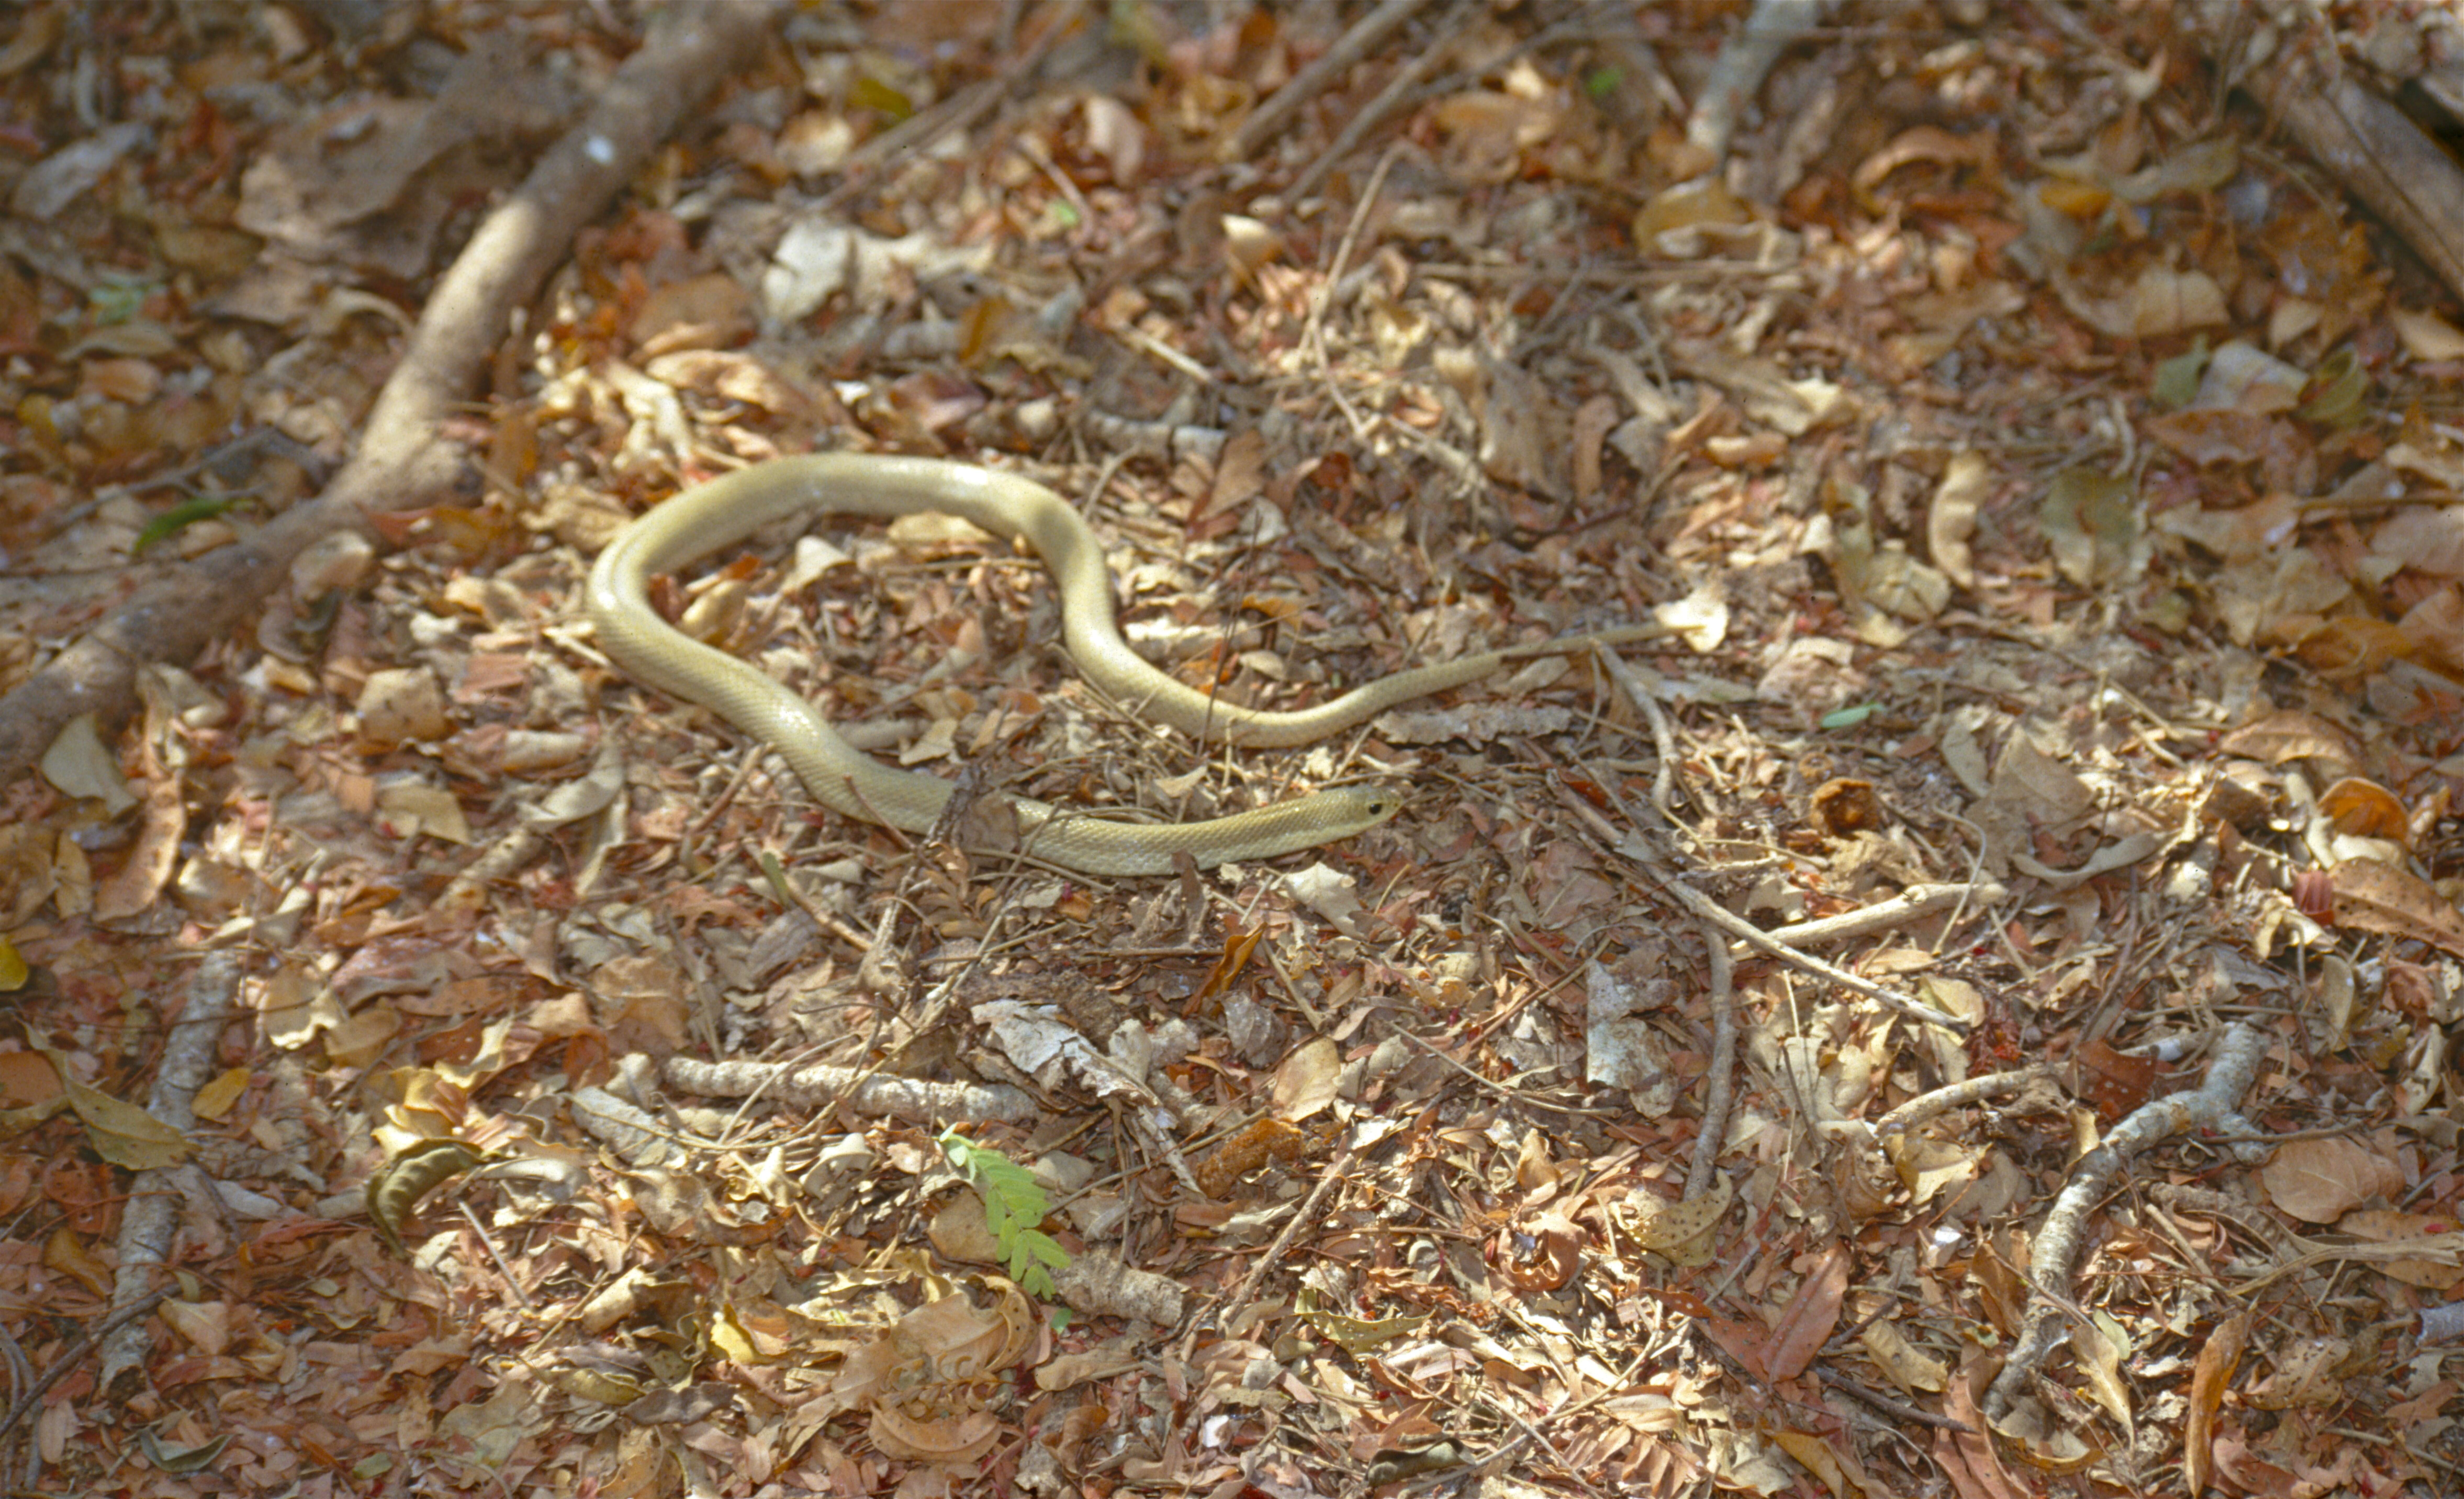 Image of Blonde Hognose Snake